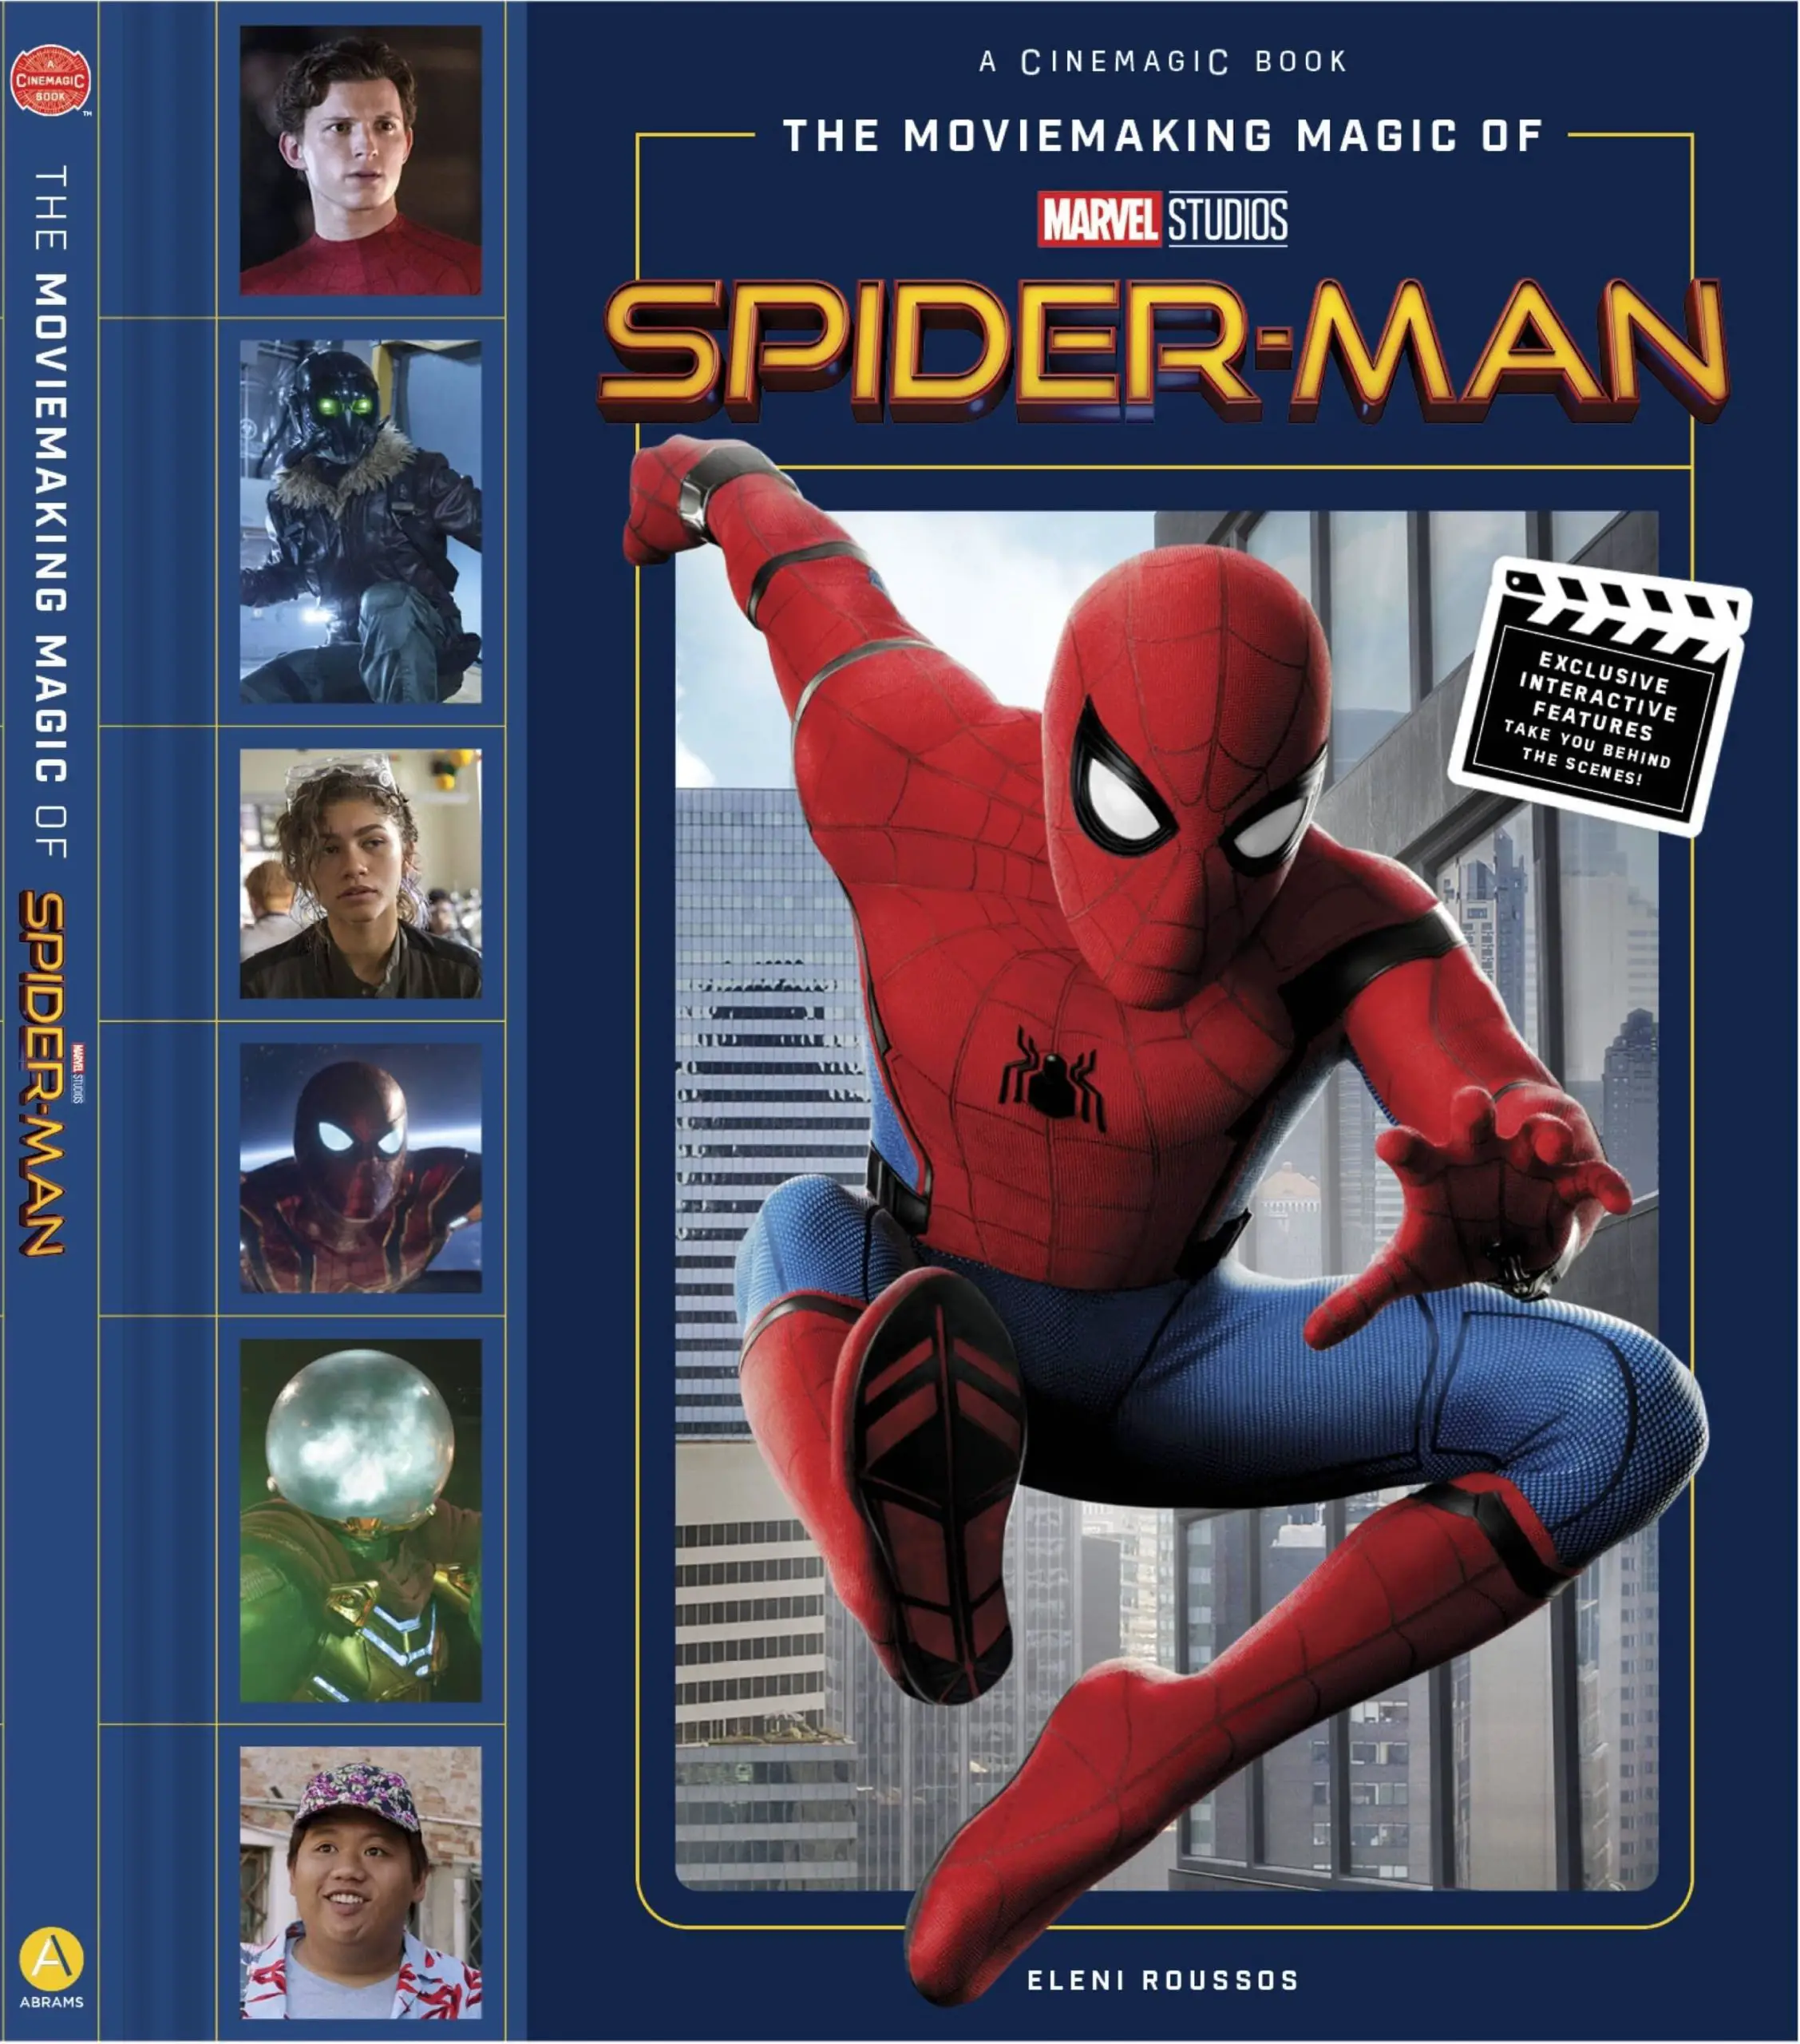 The Moviemaking Magic of Marvel Studios: Spider-Man